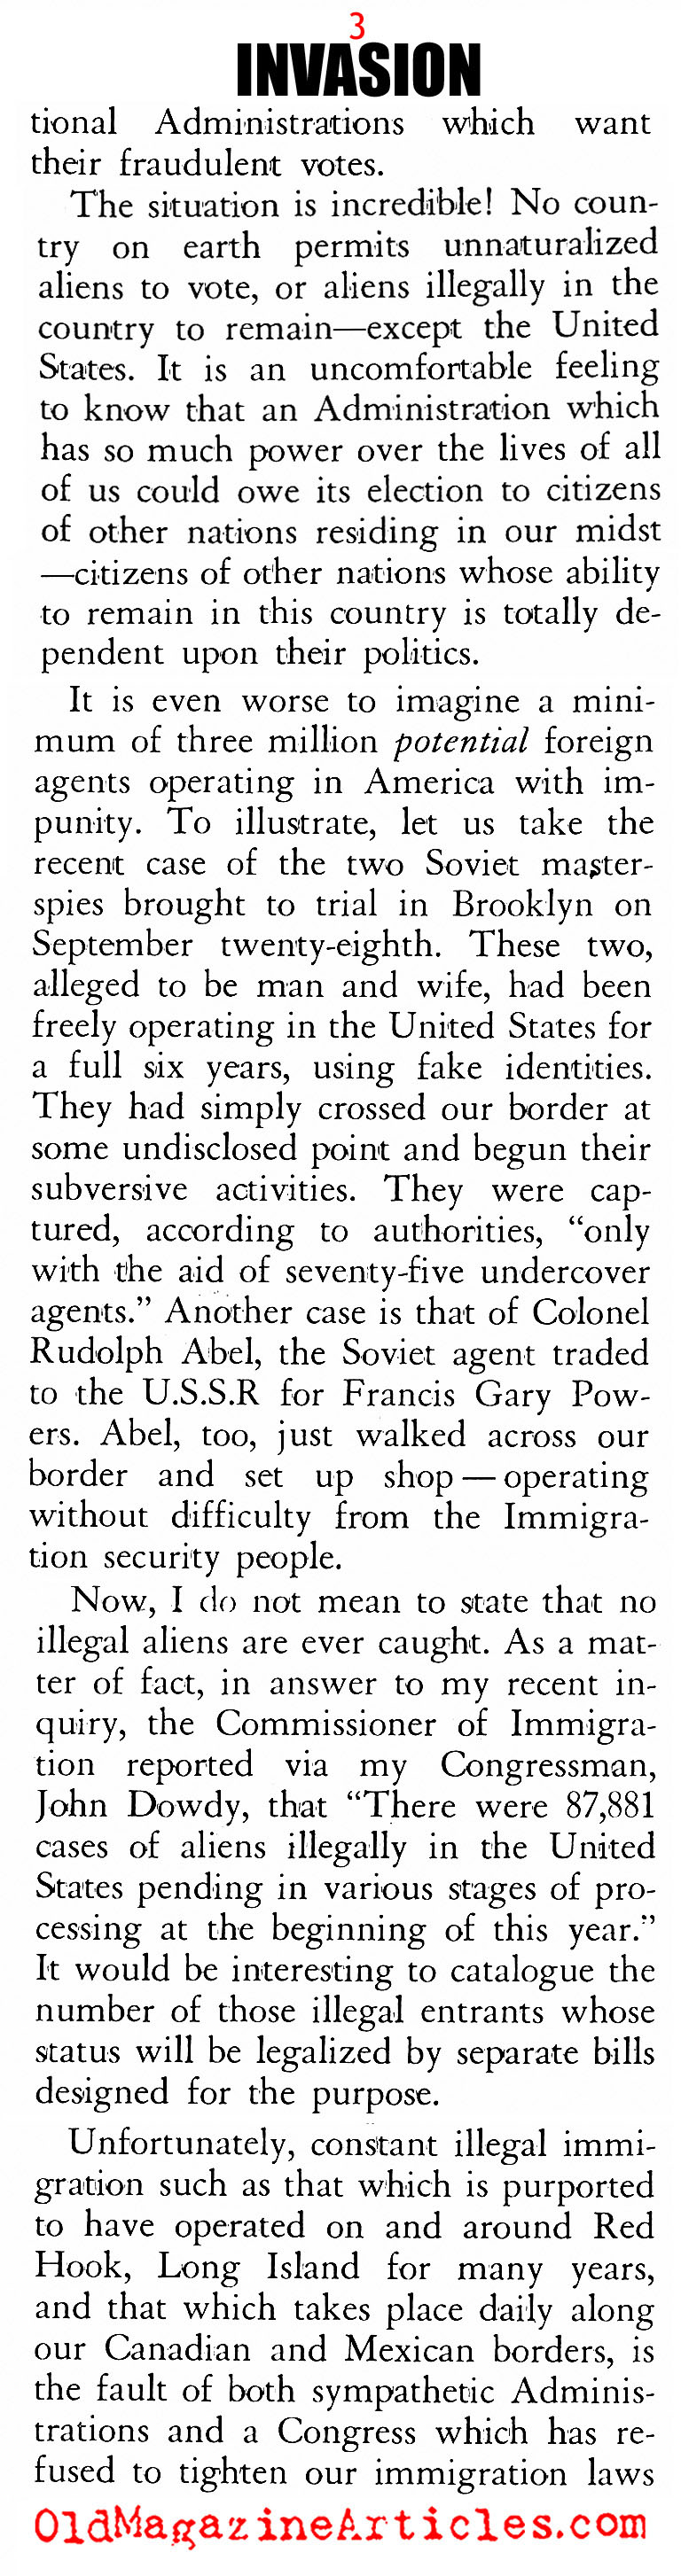 Russia's Fifth Column in America (American Opinion, 1964)